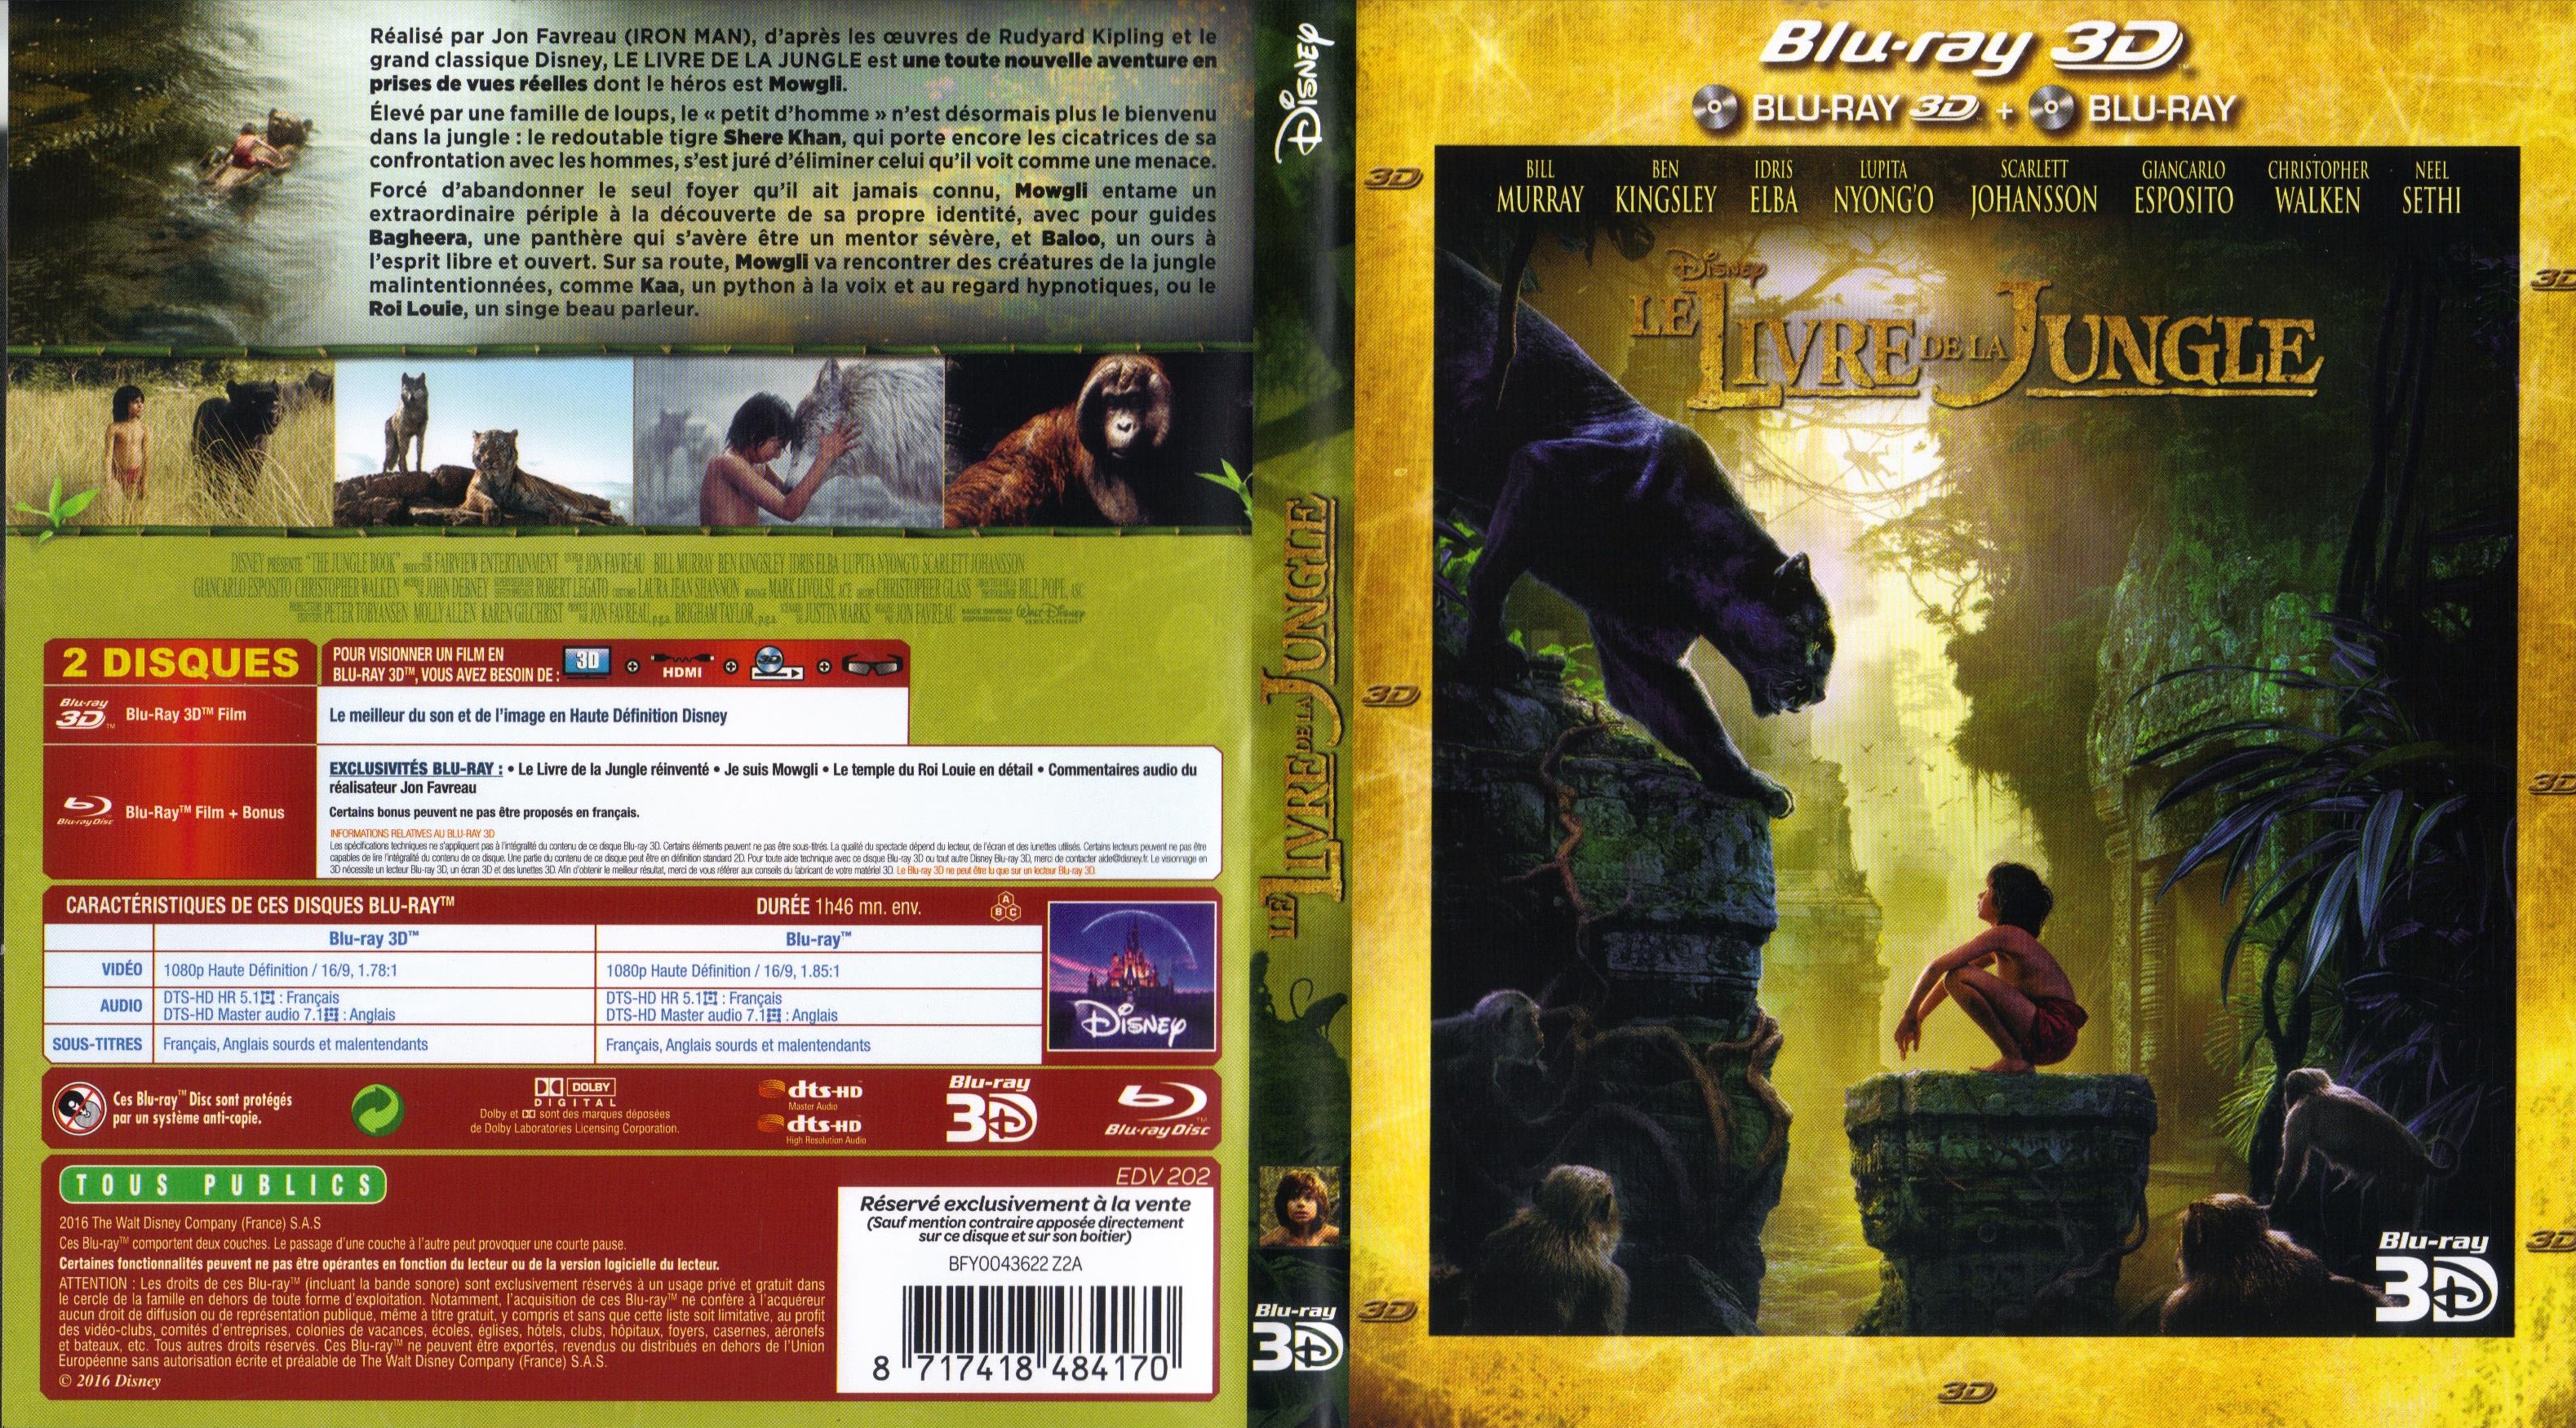 Jaquette DVD Le livre de la jungle (2016) (BLU-RAY)